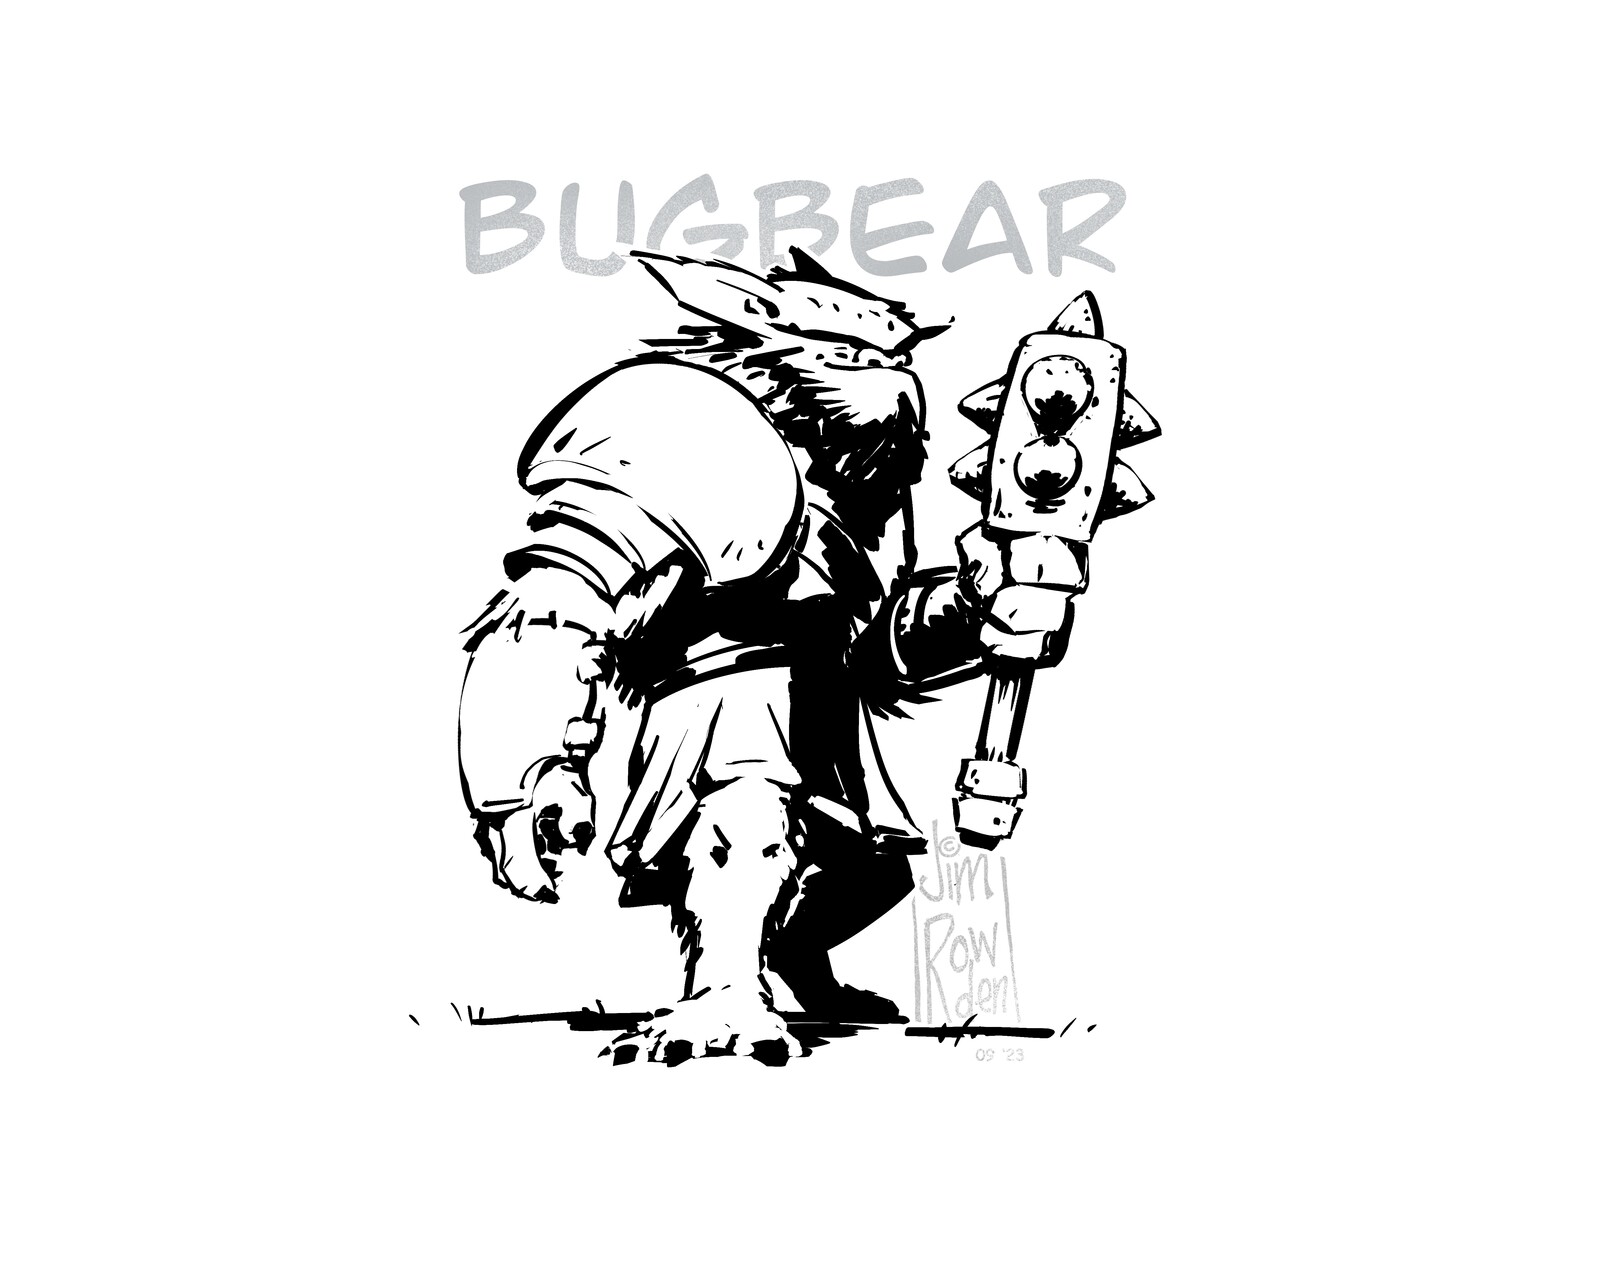 The Bugbear!